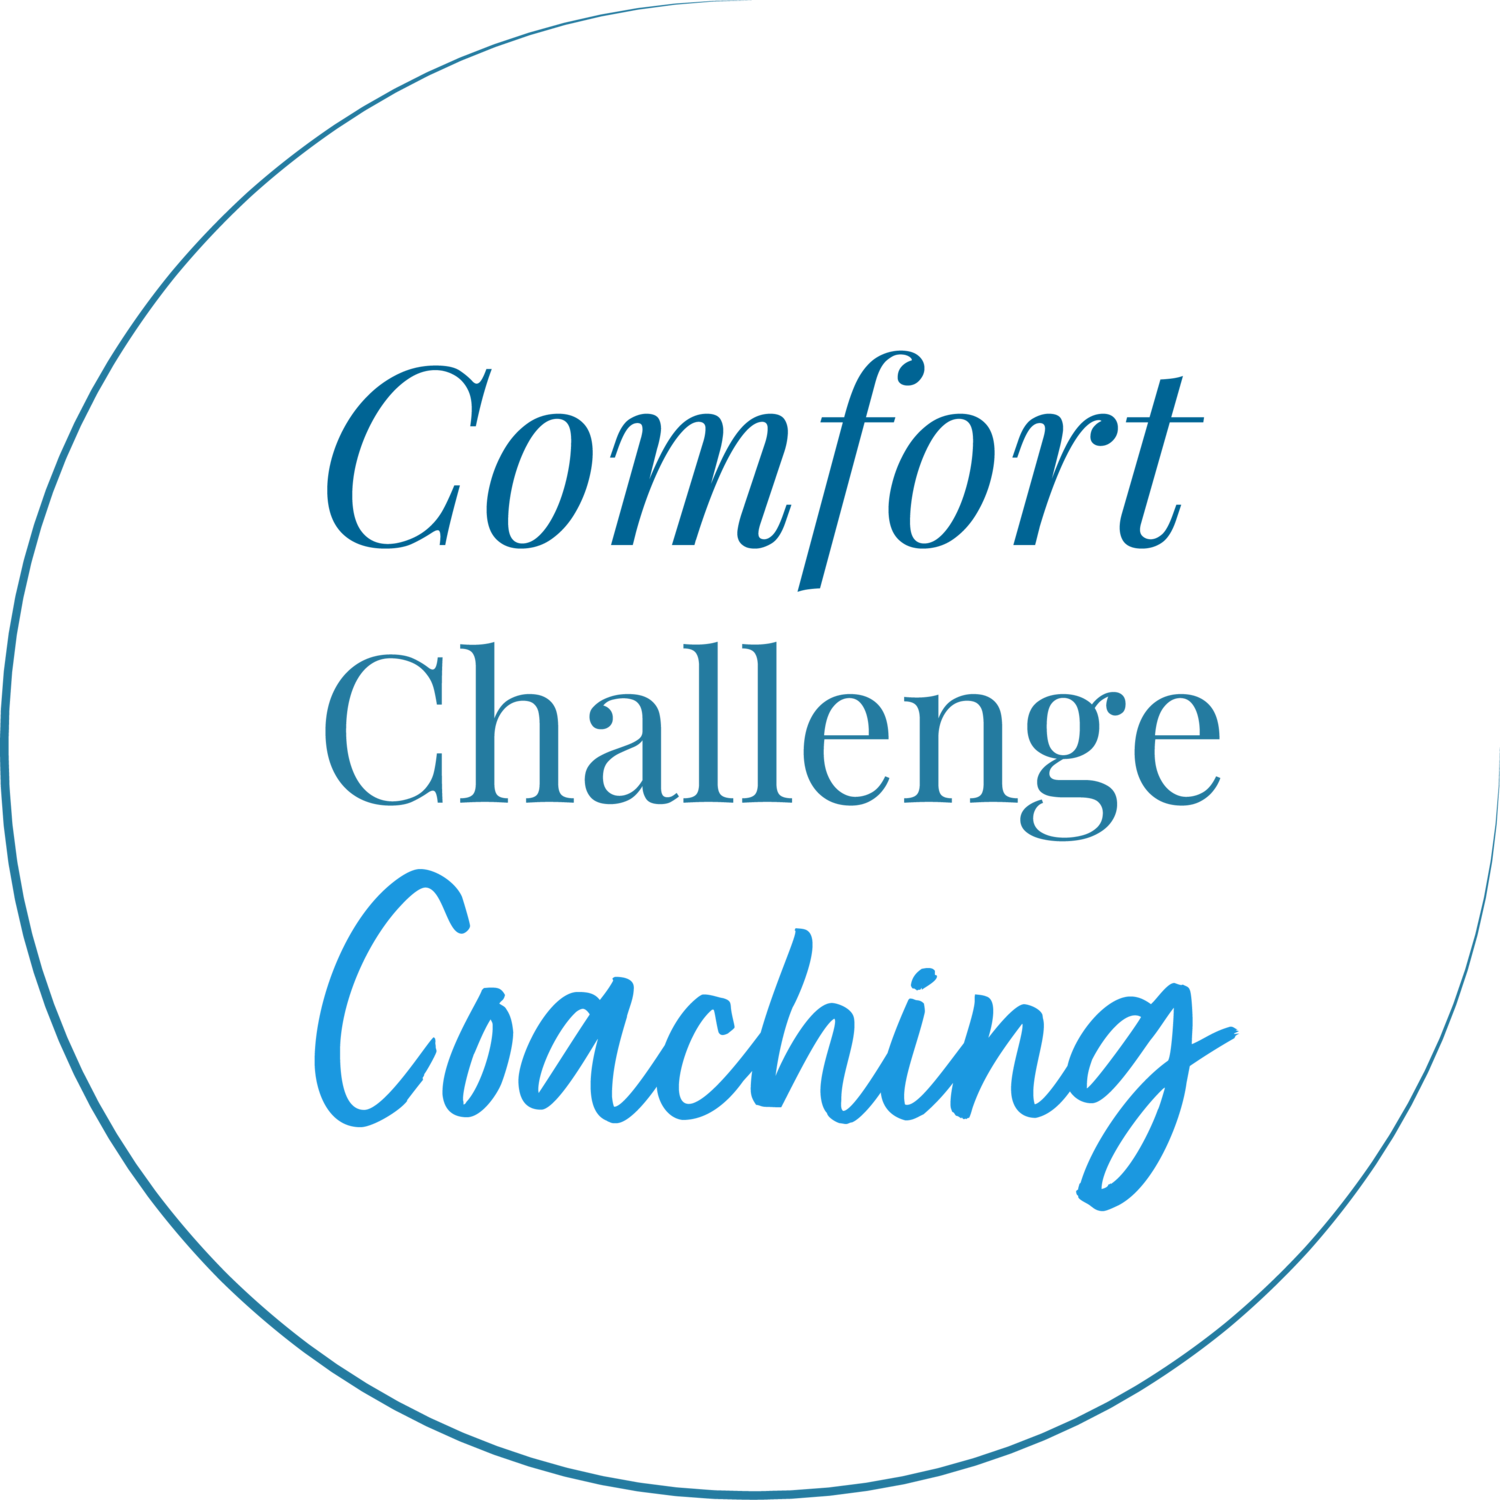 Comfort Challenge Coaching